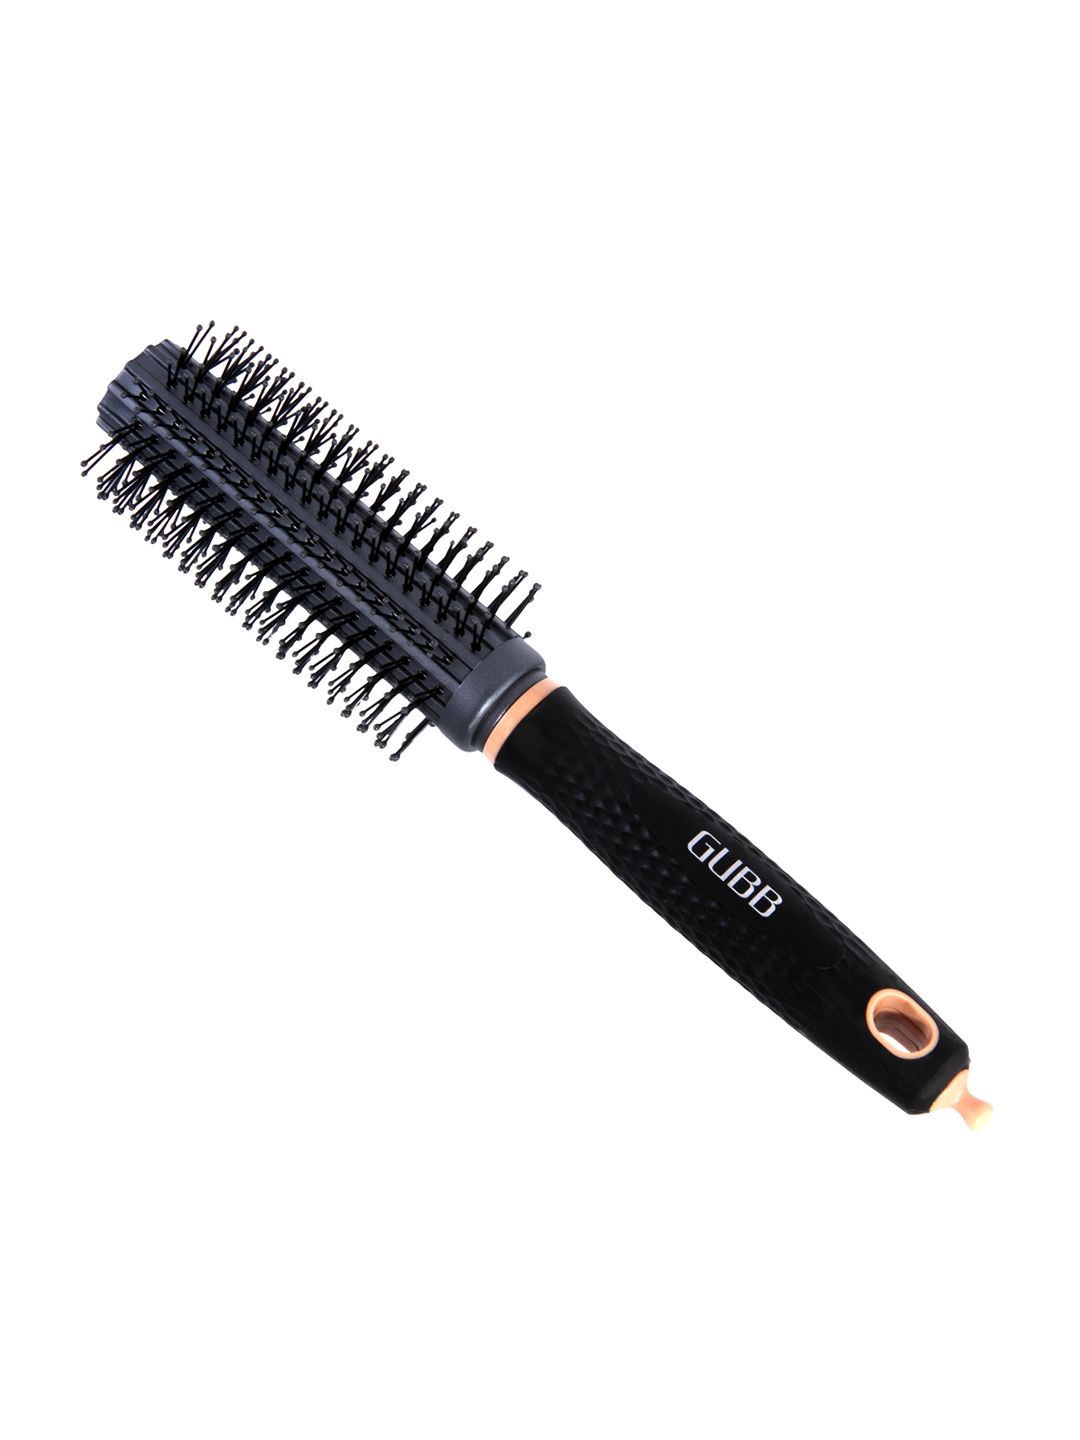 GUBB Unisex Black Round Hair Brush Comb With Pin Price in India